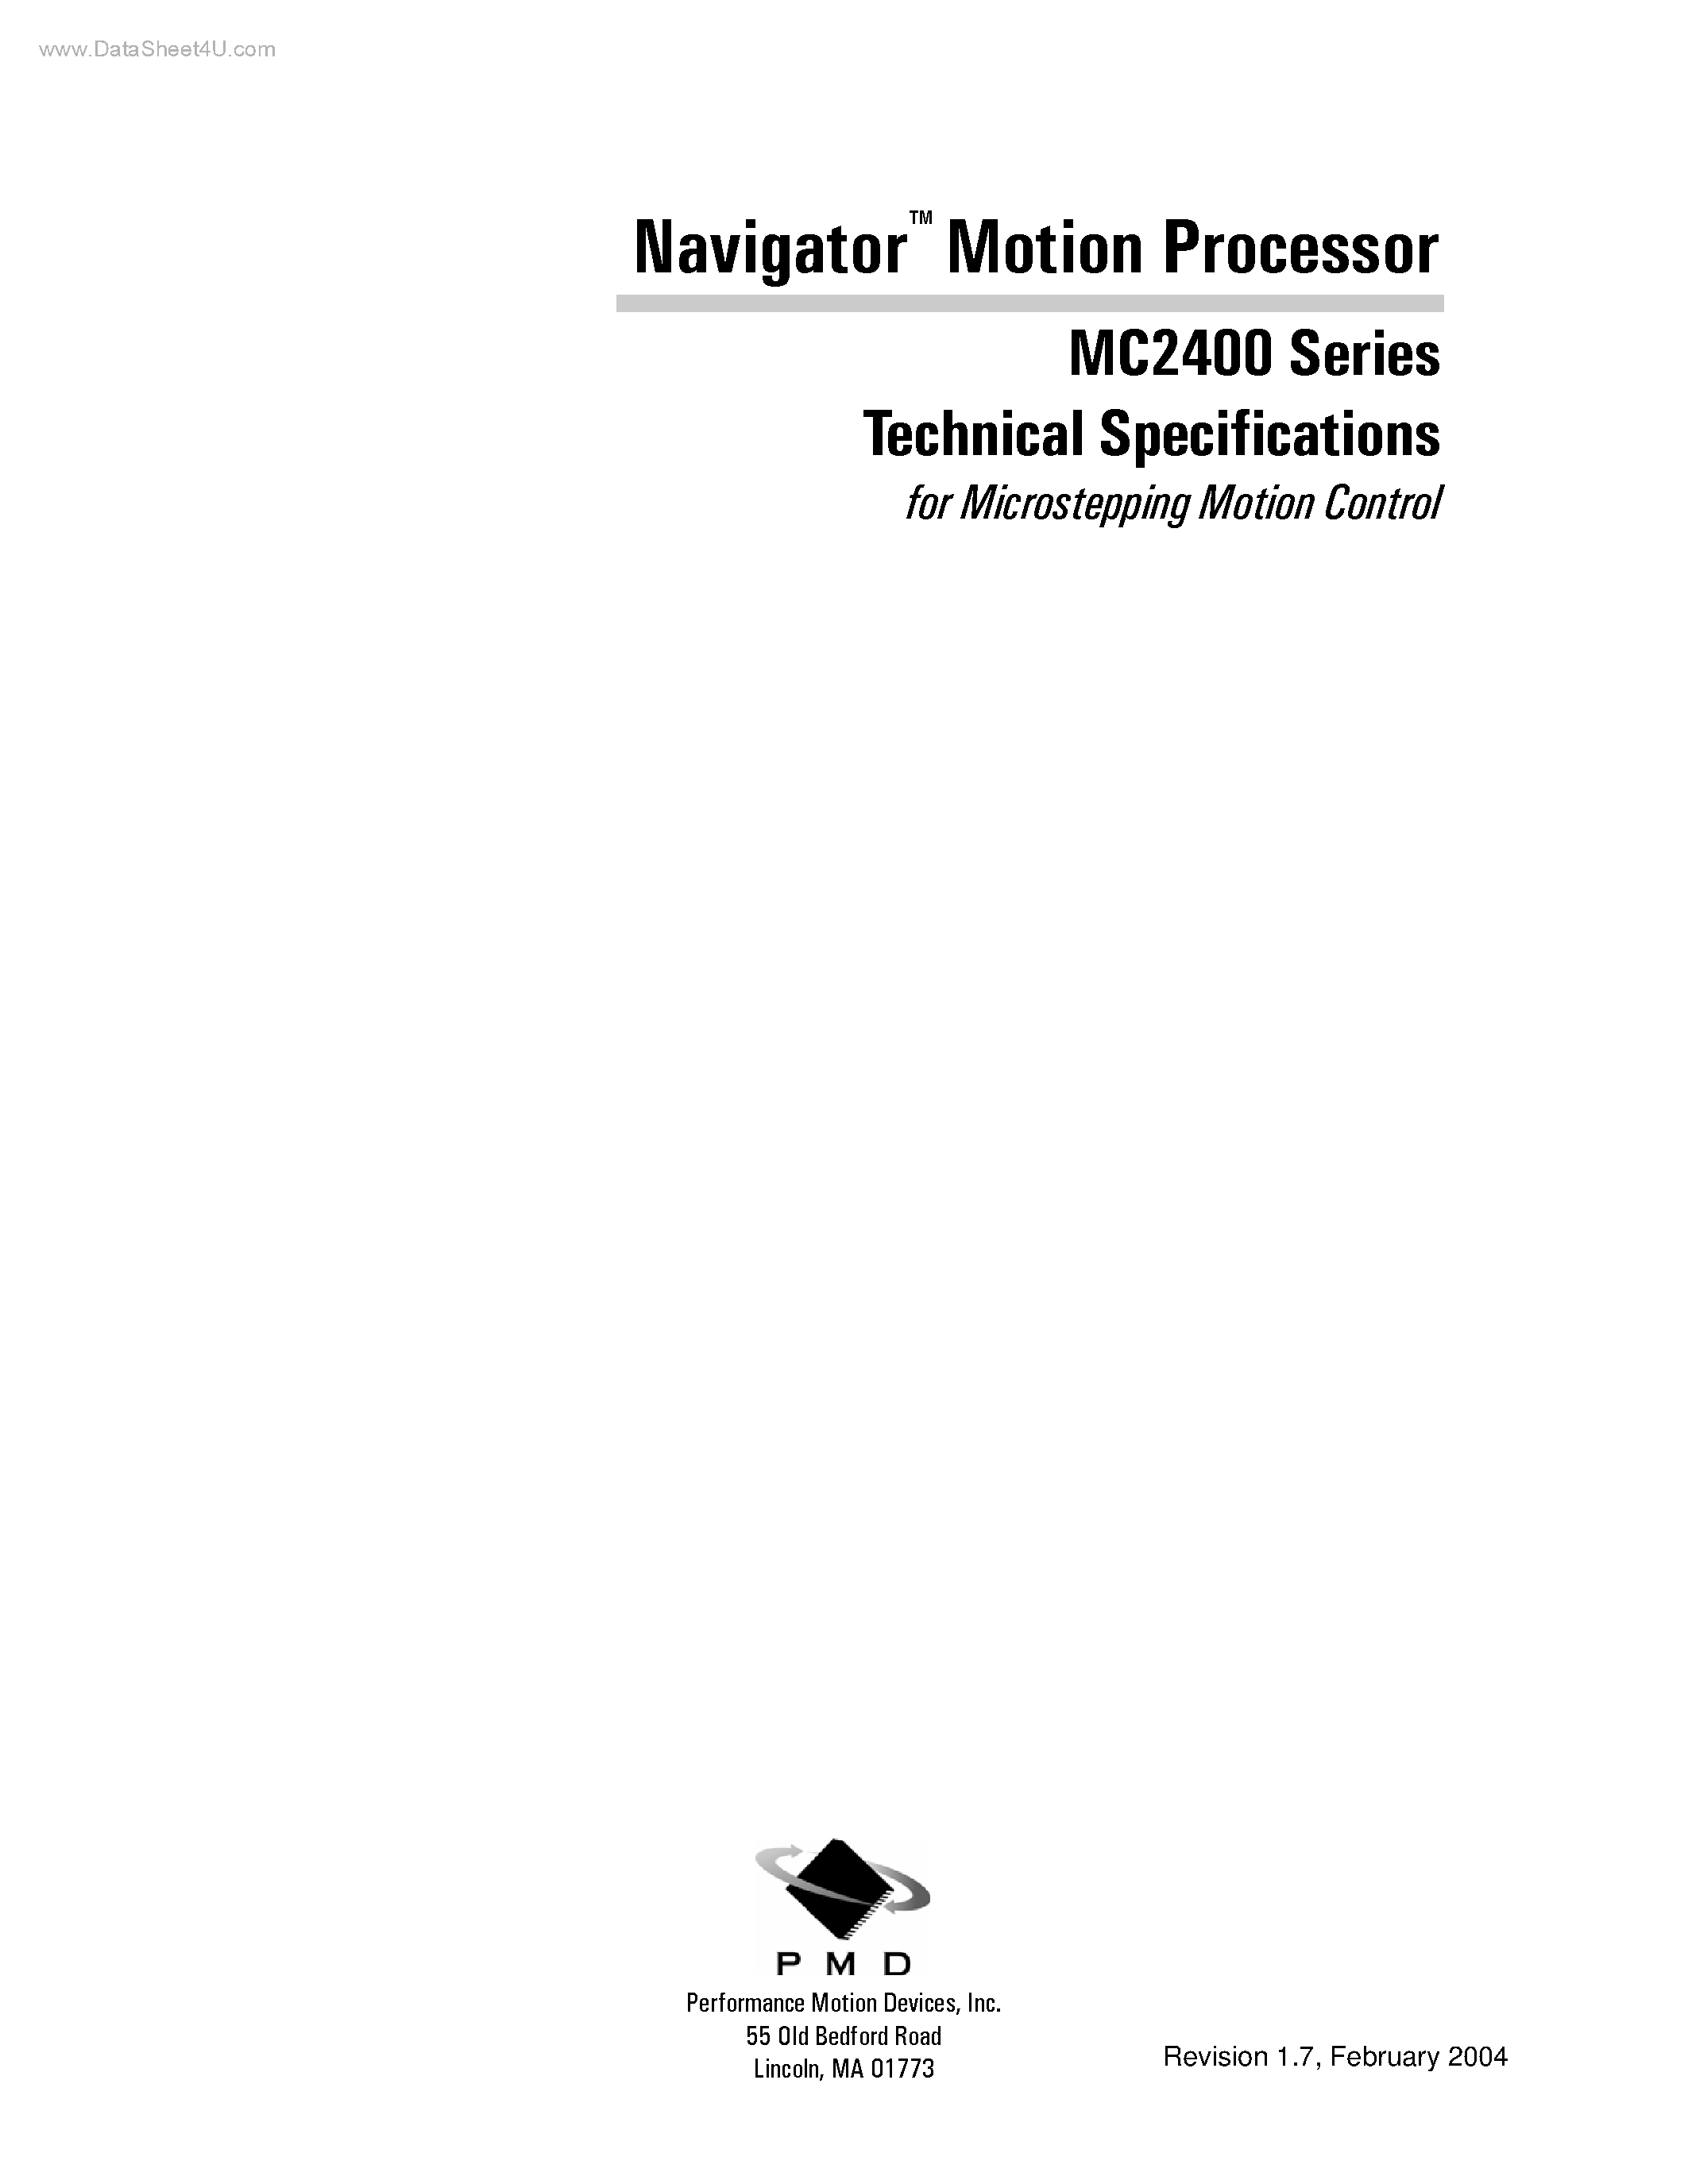 Datasheet MC2400 - Navigator Motion Processor page 1